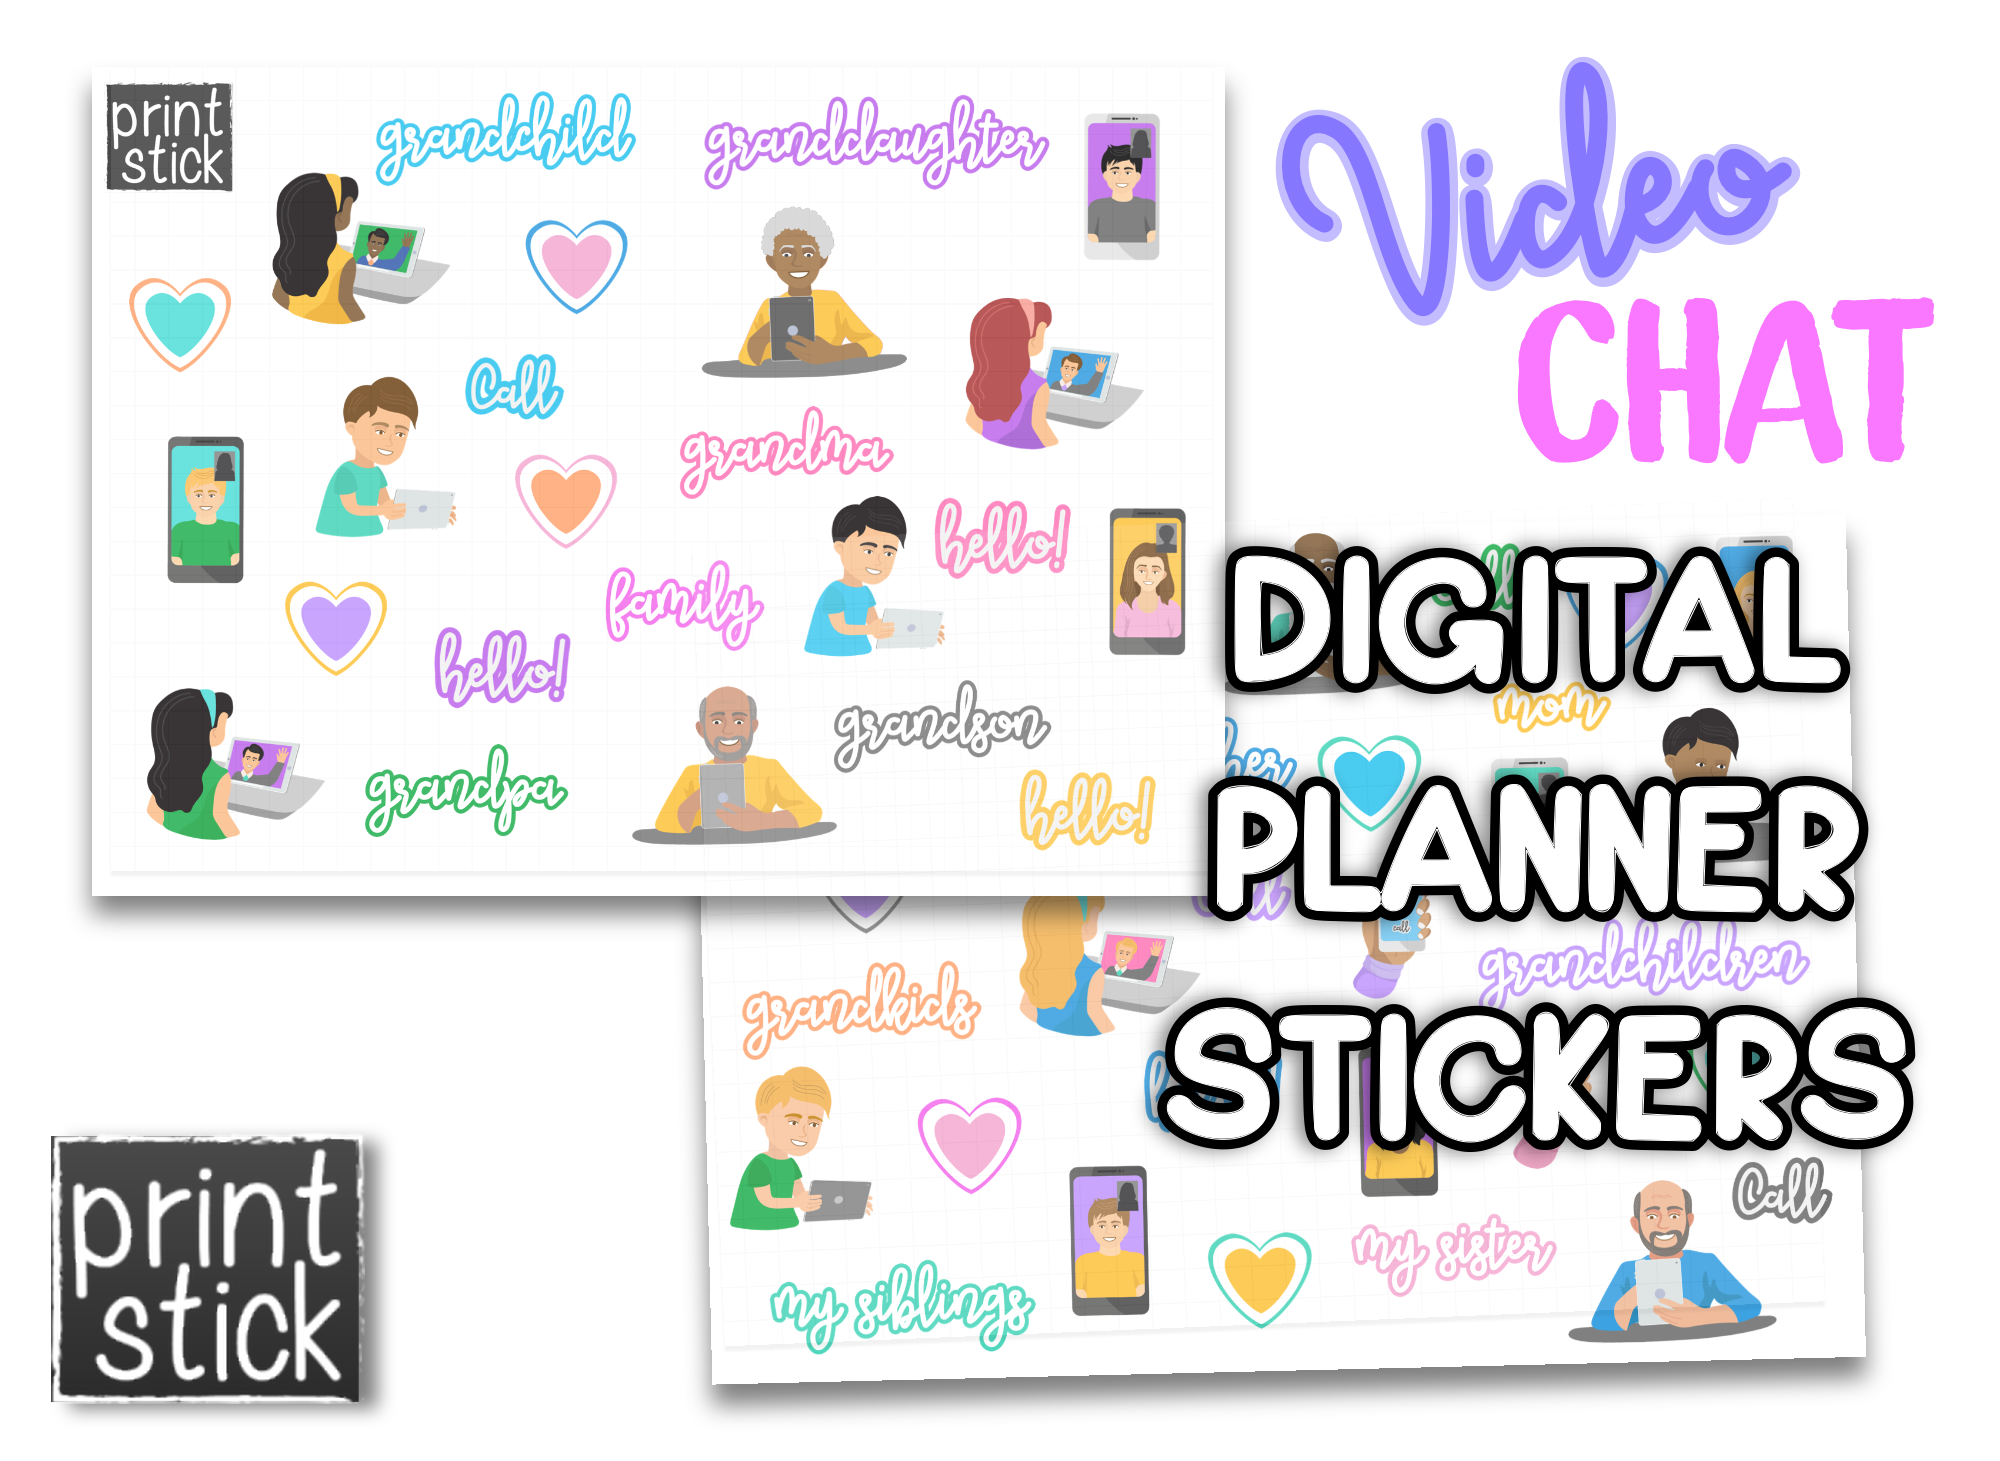 SS Video Chat Digital Planner Stickers - Print Stick